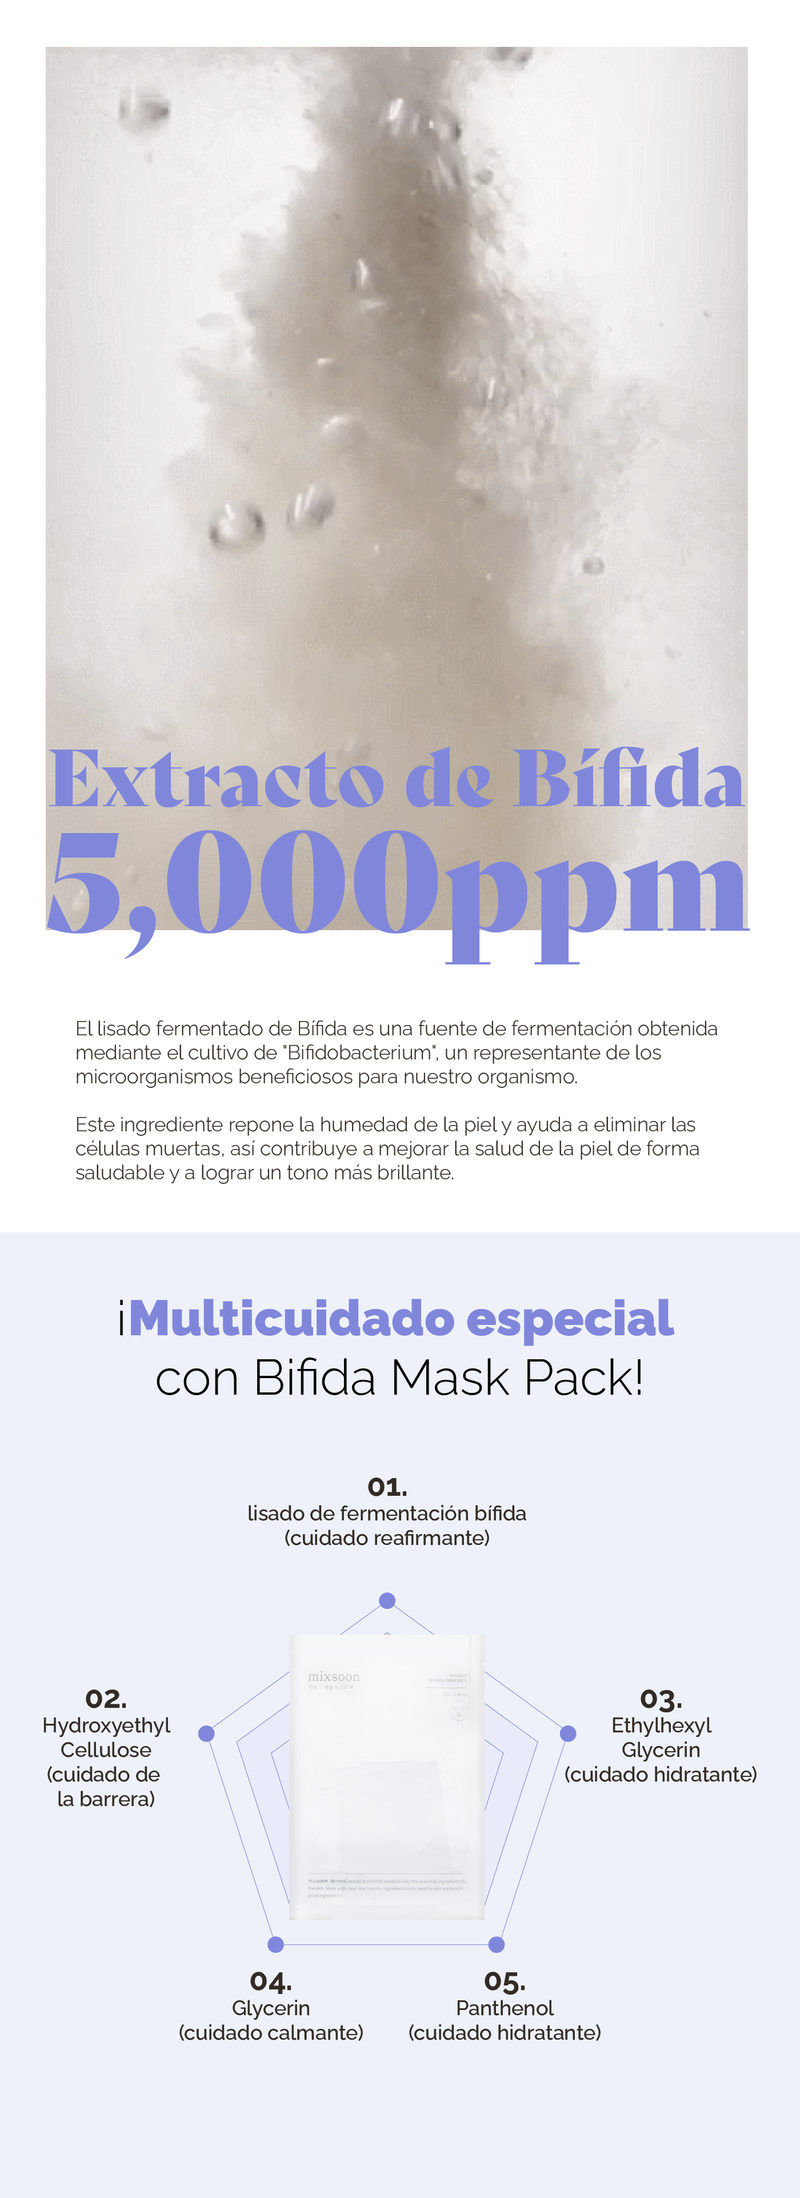 MIXSOON Bifida Mask Pack (1 unidad)